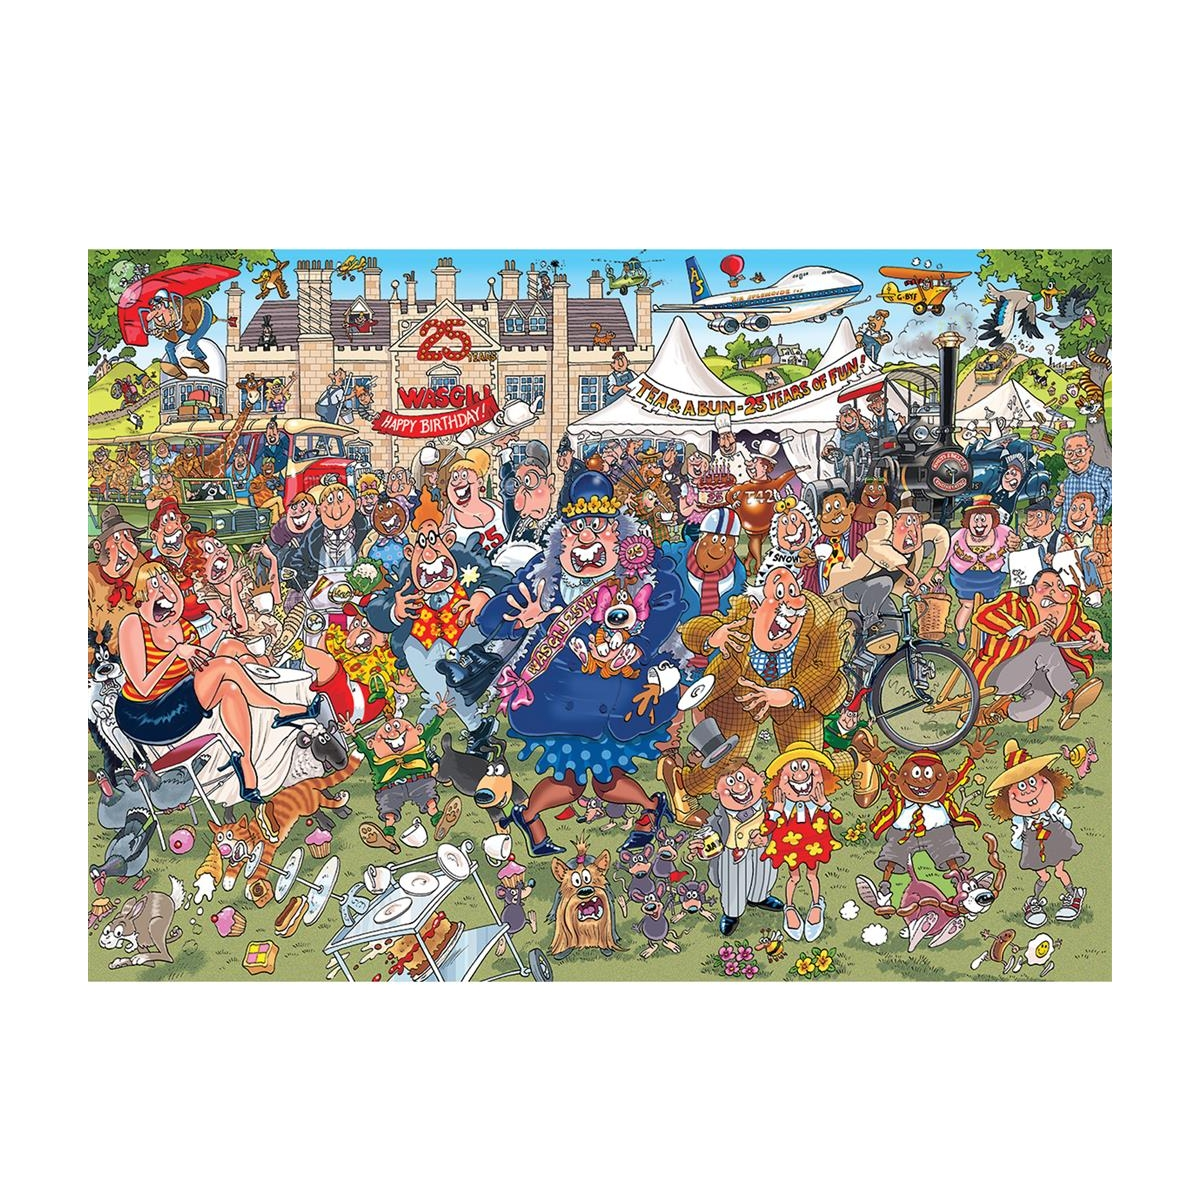 JUMBO Puzzle Wasgij Original 40 Stück) - Puzzle Gartenparty! (2 1000 x